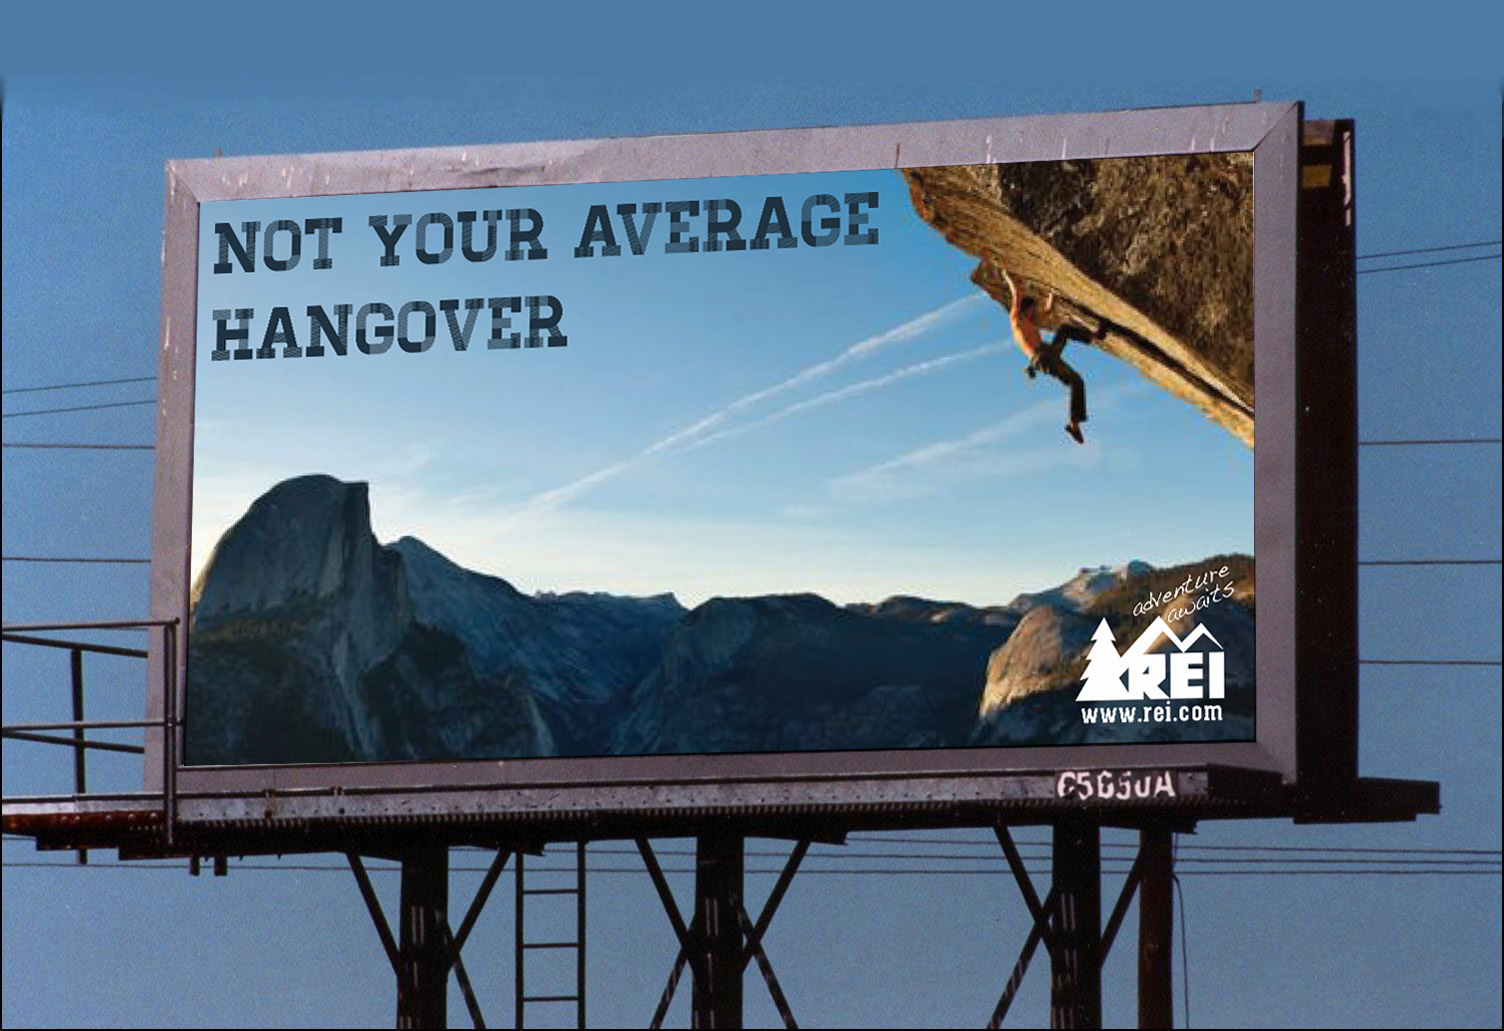 REI Public Transportation Ad Campaign Hero Image